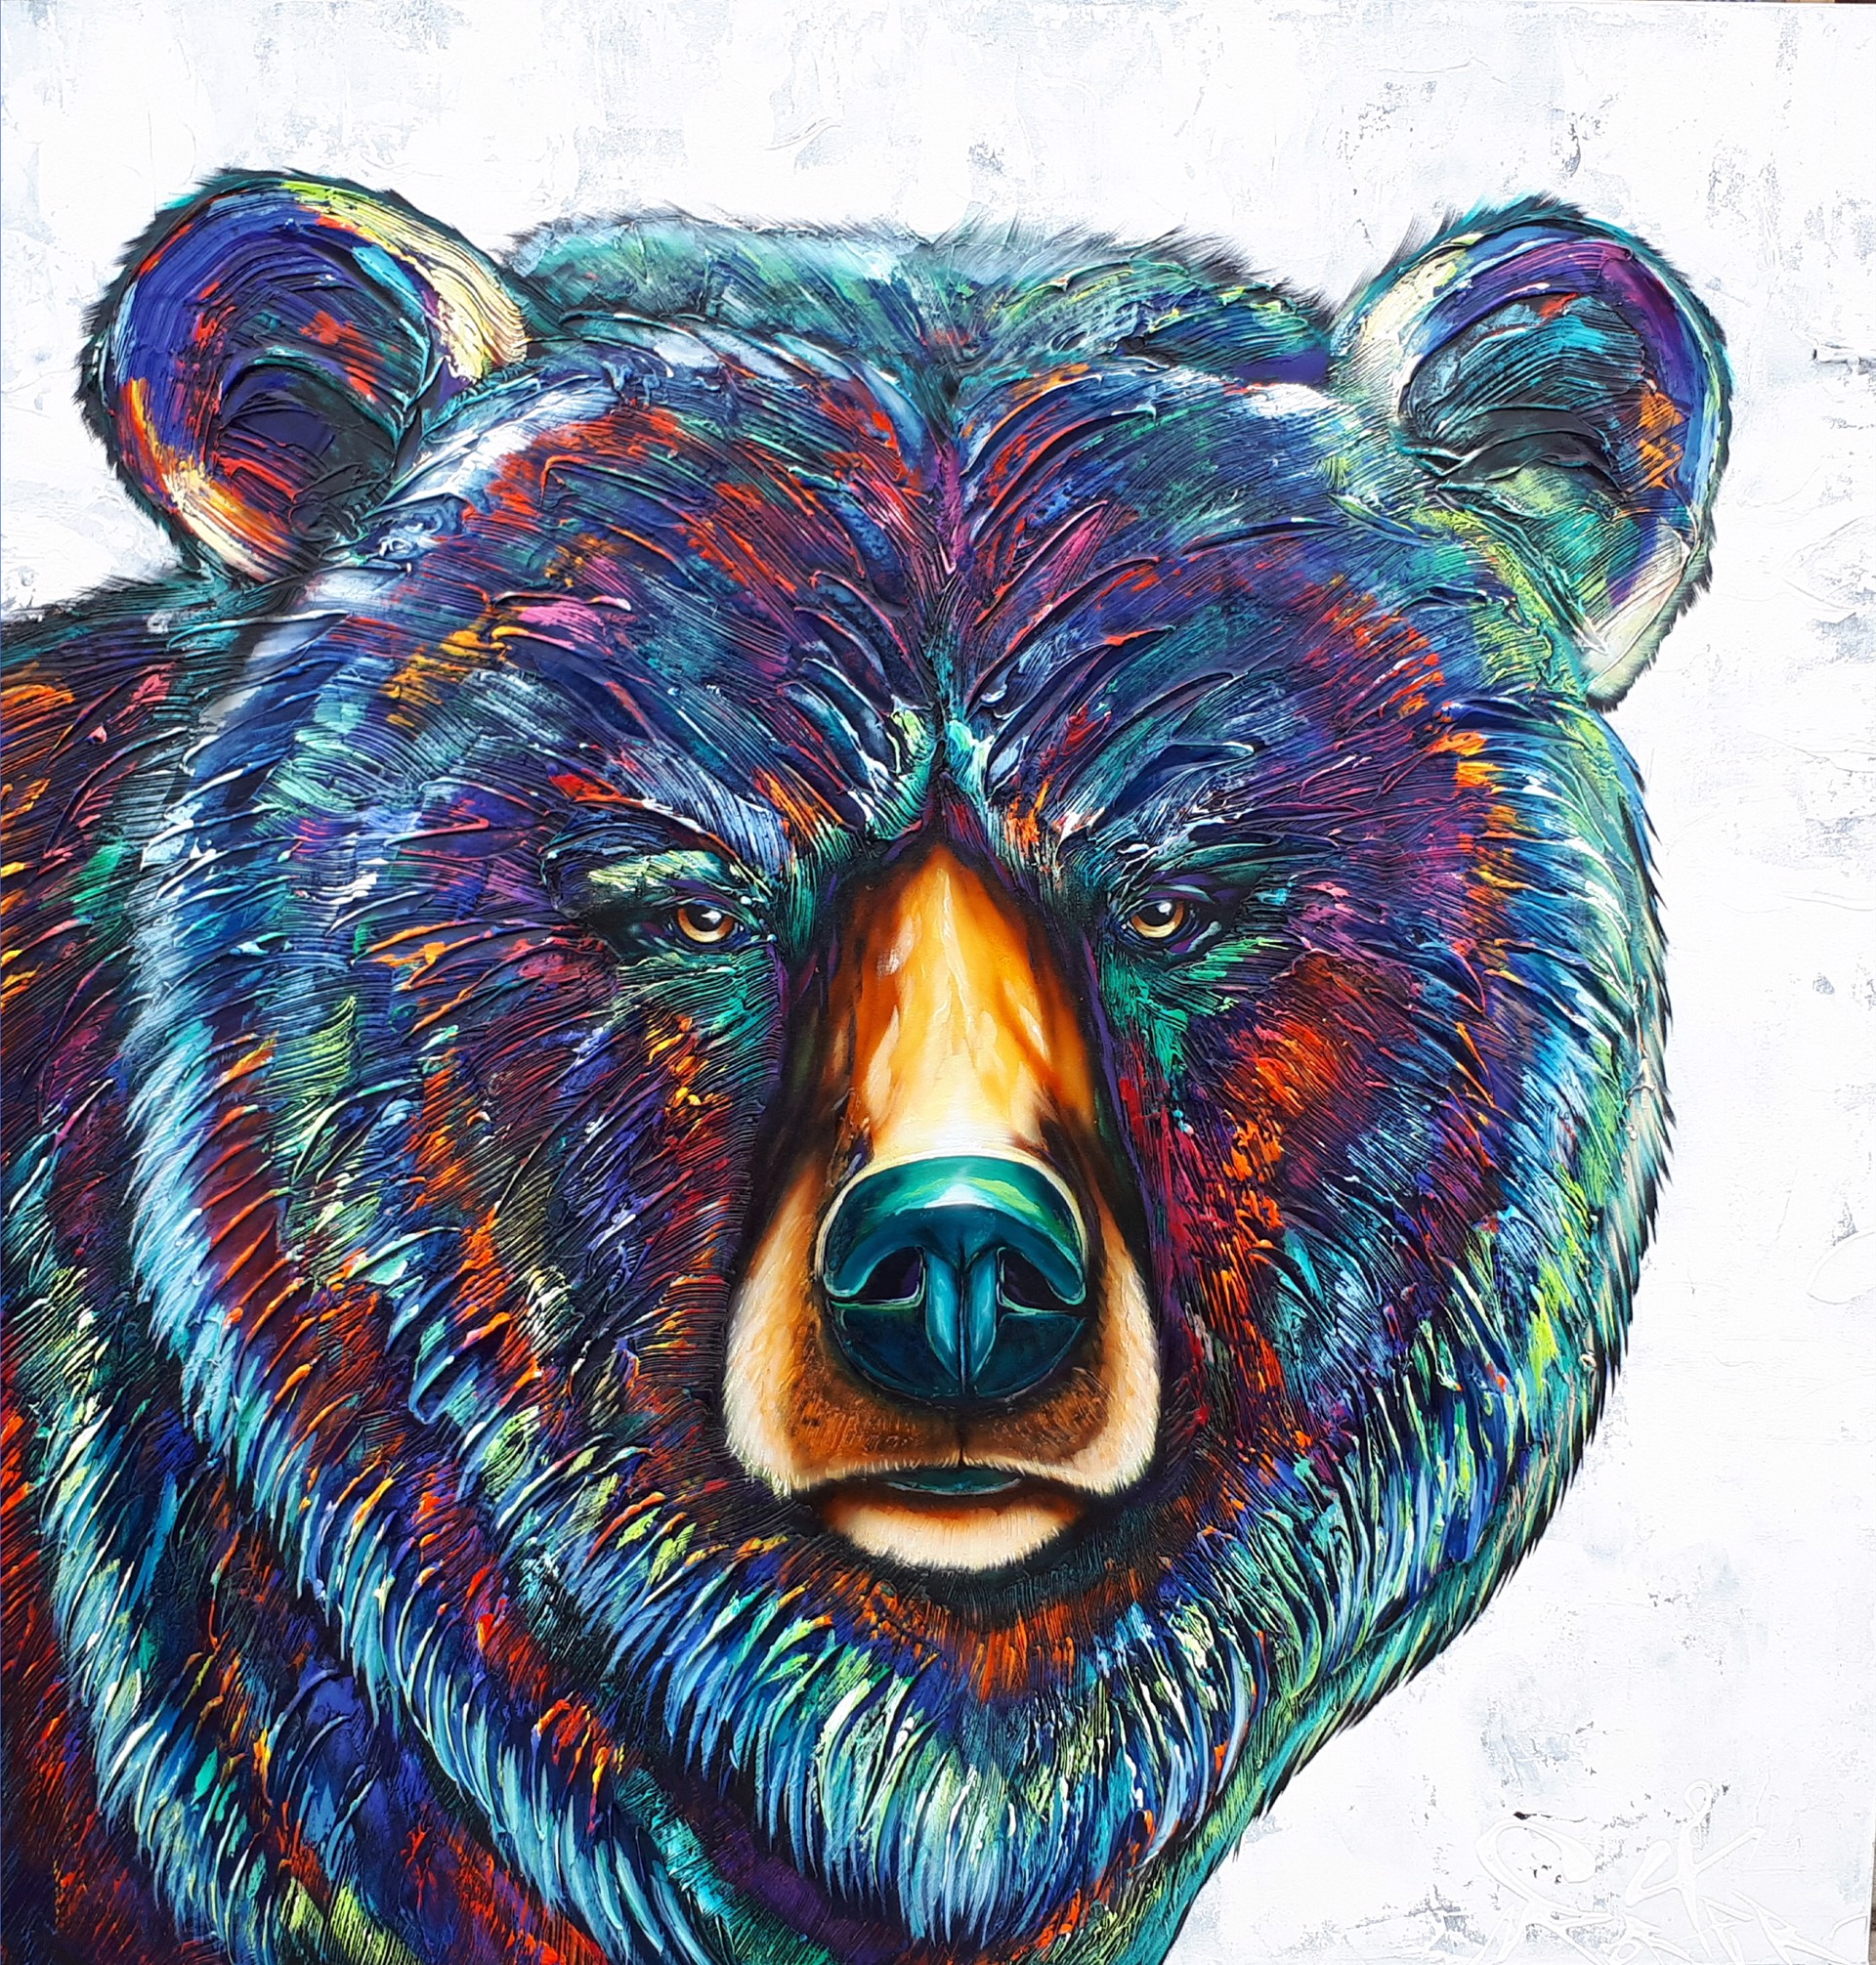 Bear 183912 by Brian Porter